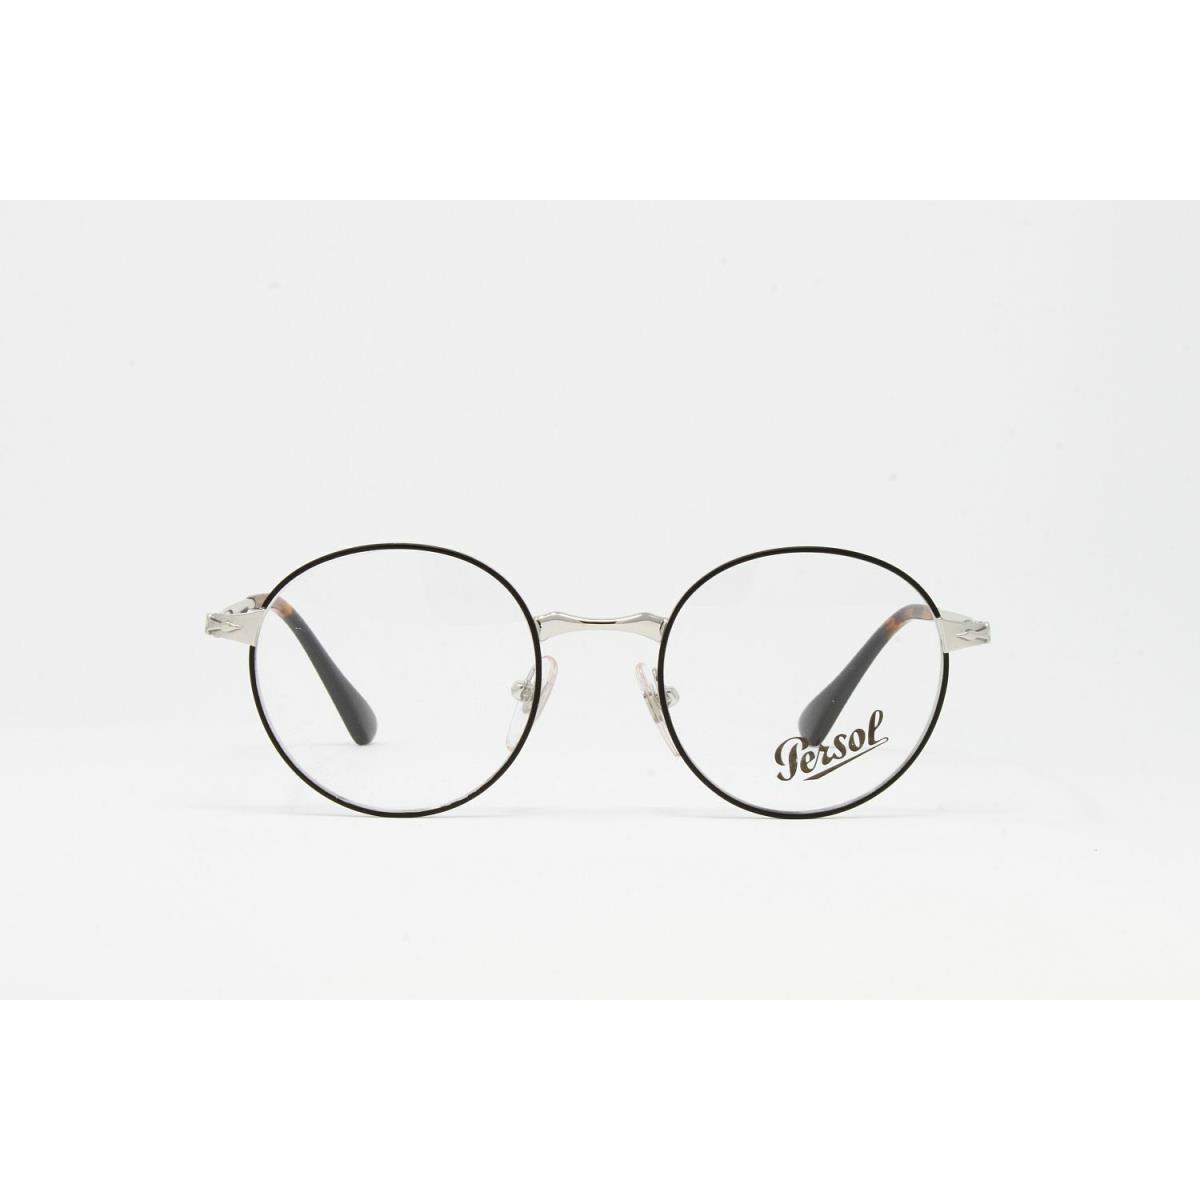 Persol eyeglasses  - Silver Frame 0